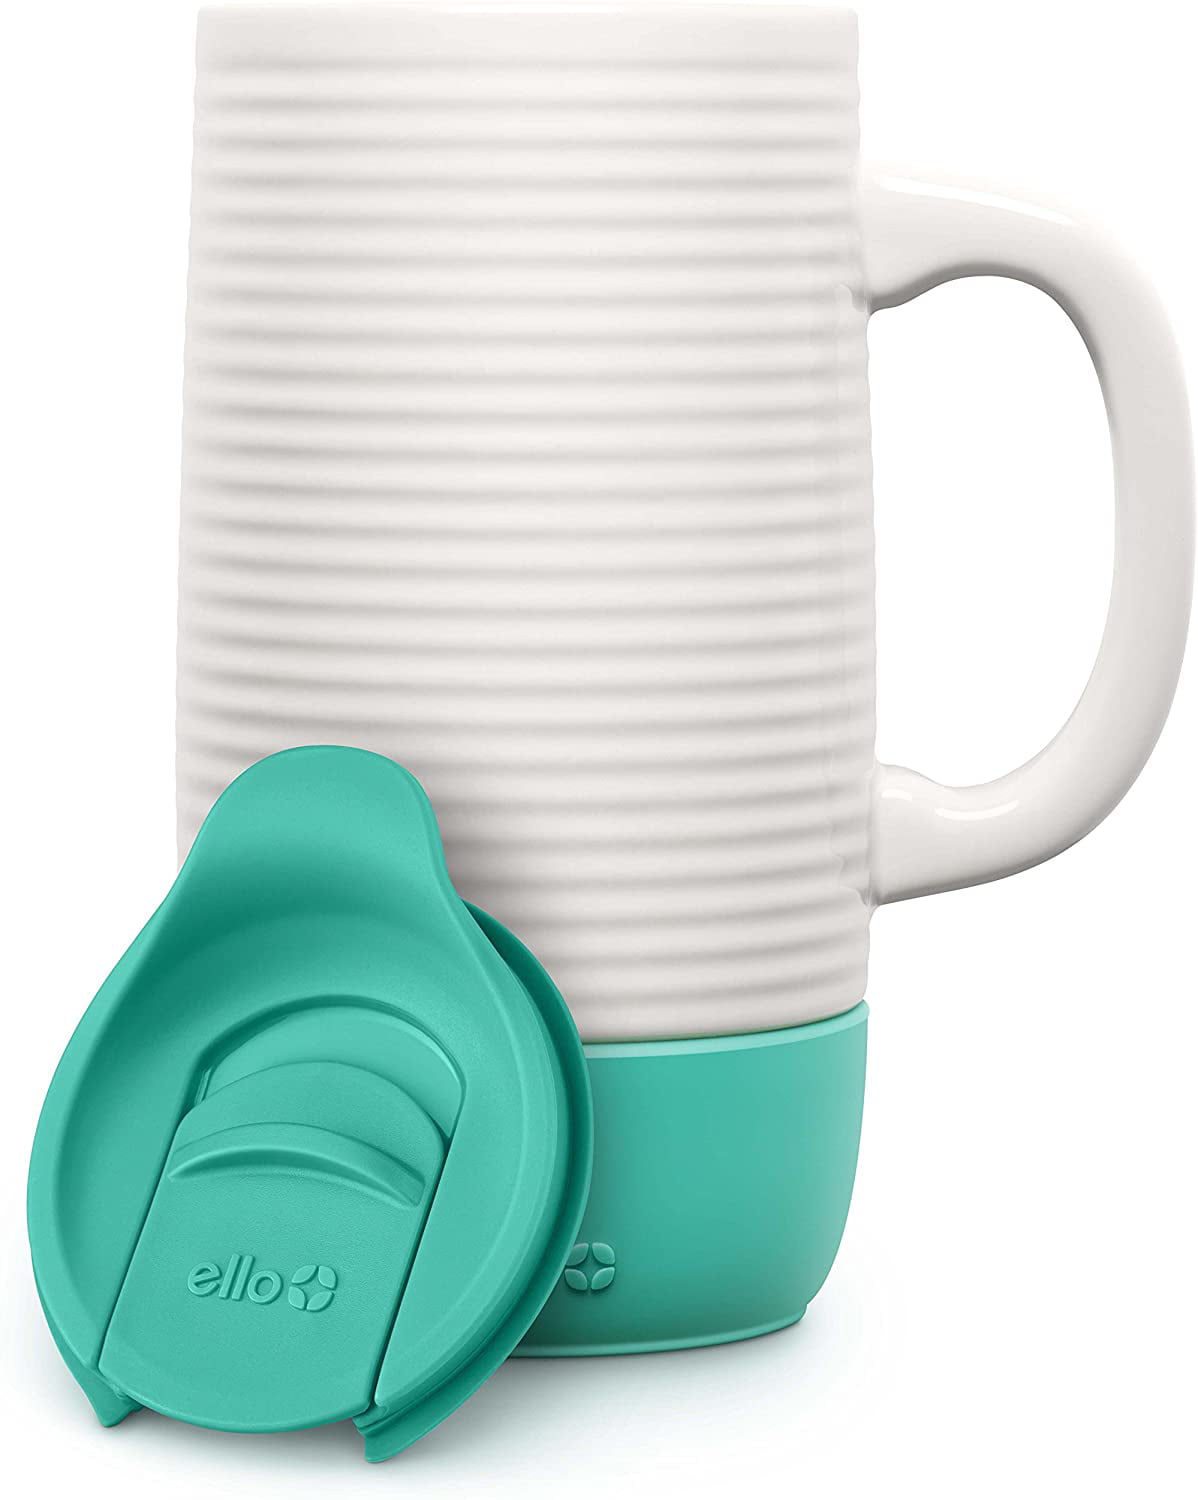 18oz Mug with Ceramic Coating Inside, Insulated Coffee Mug with Lid, Leak  Proof Coffee Travel Mug, T…See more 18oz Mug with Ceramic Coating Inside